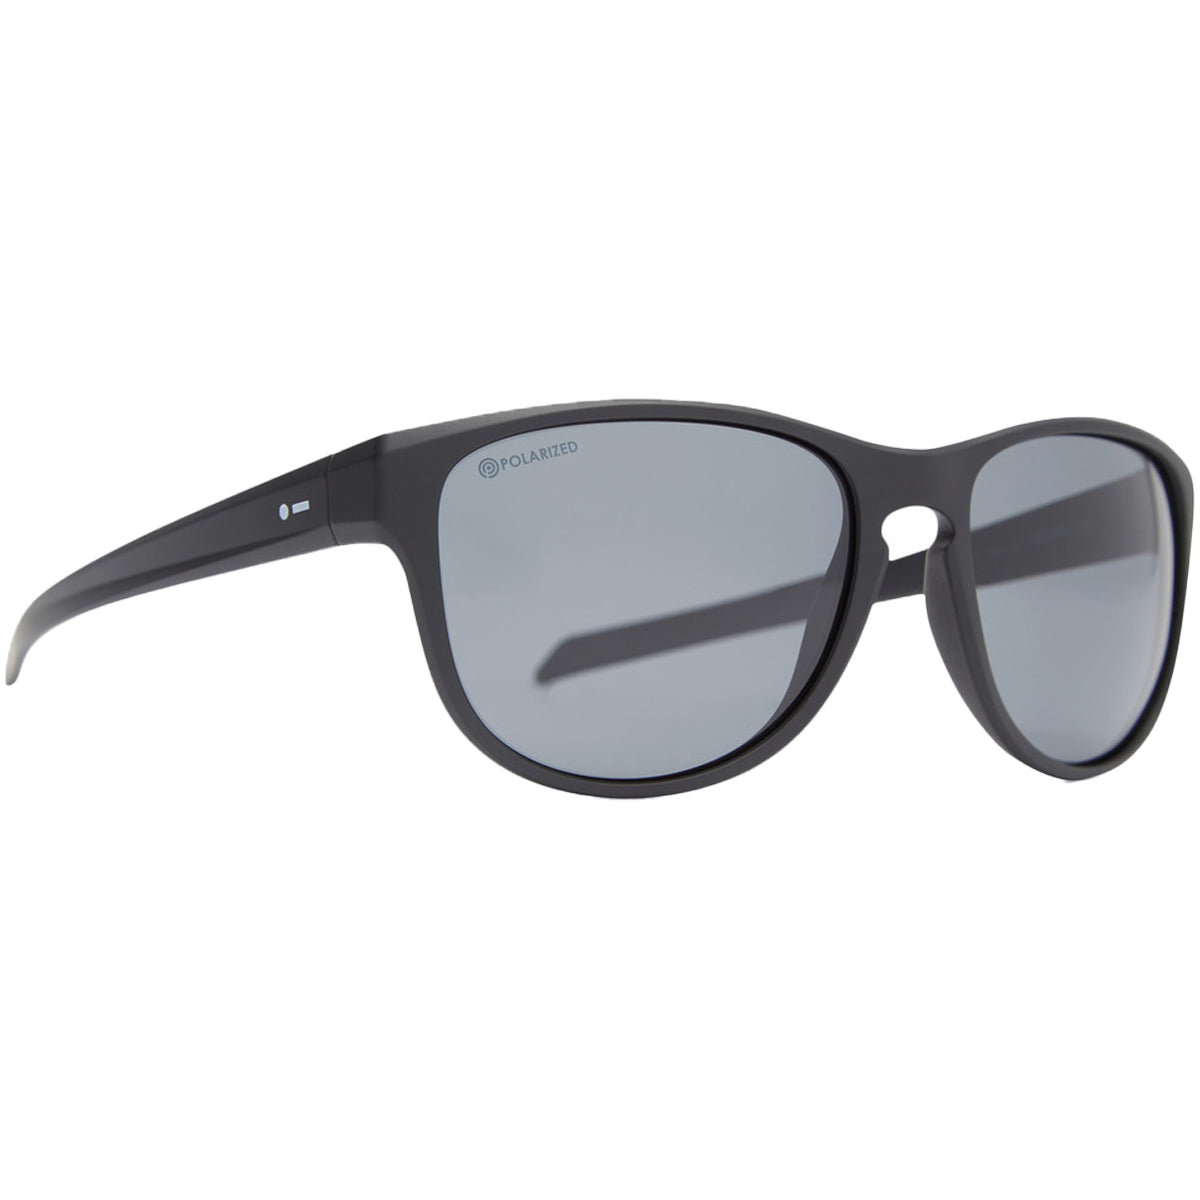 Dot Dash Obtanium Adult Lifestyle Sunglasses-AOYEY00106